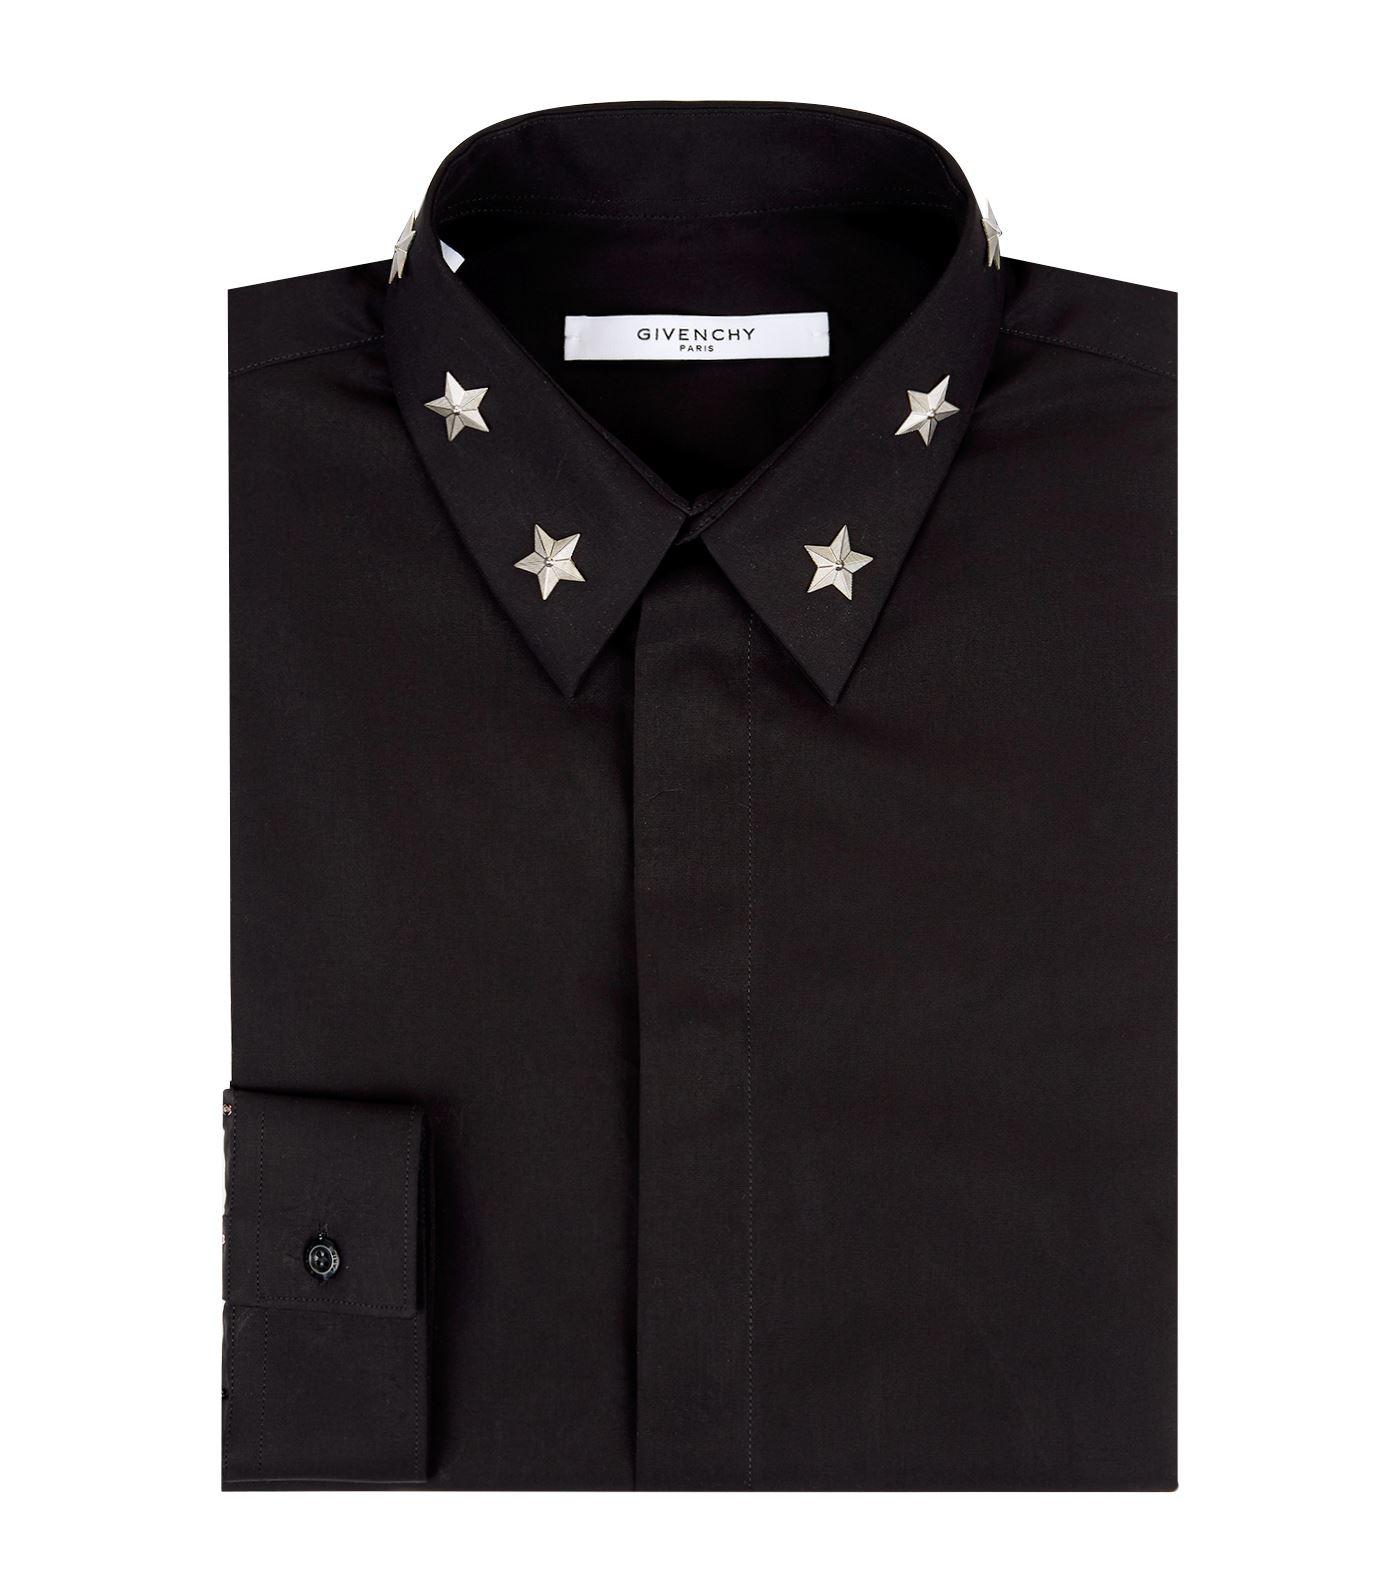 shirt with stars on collar